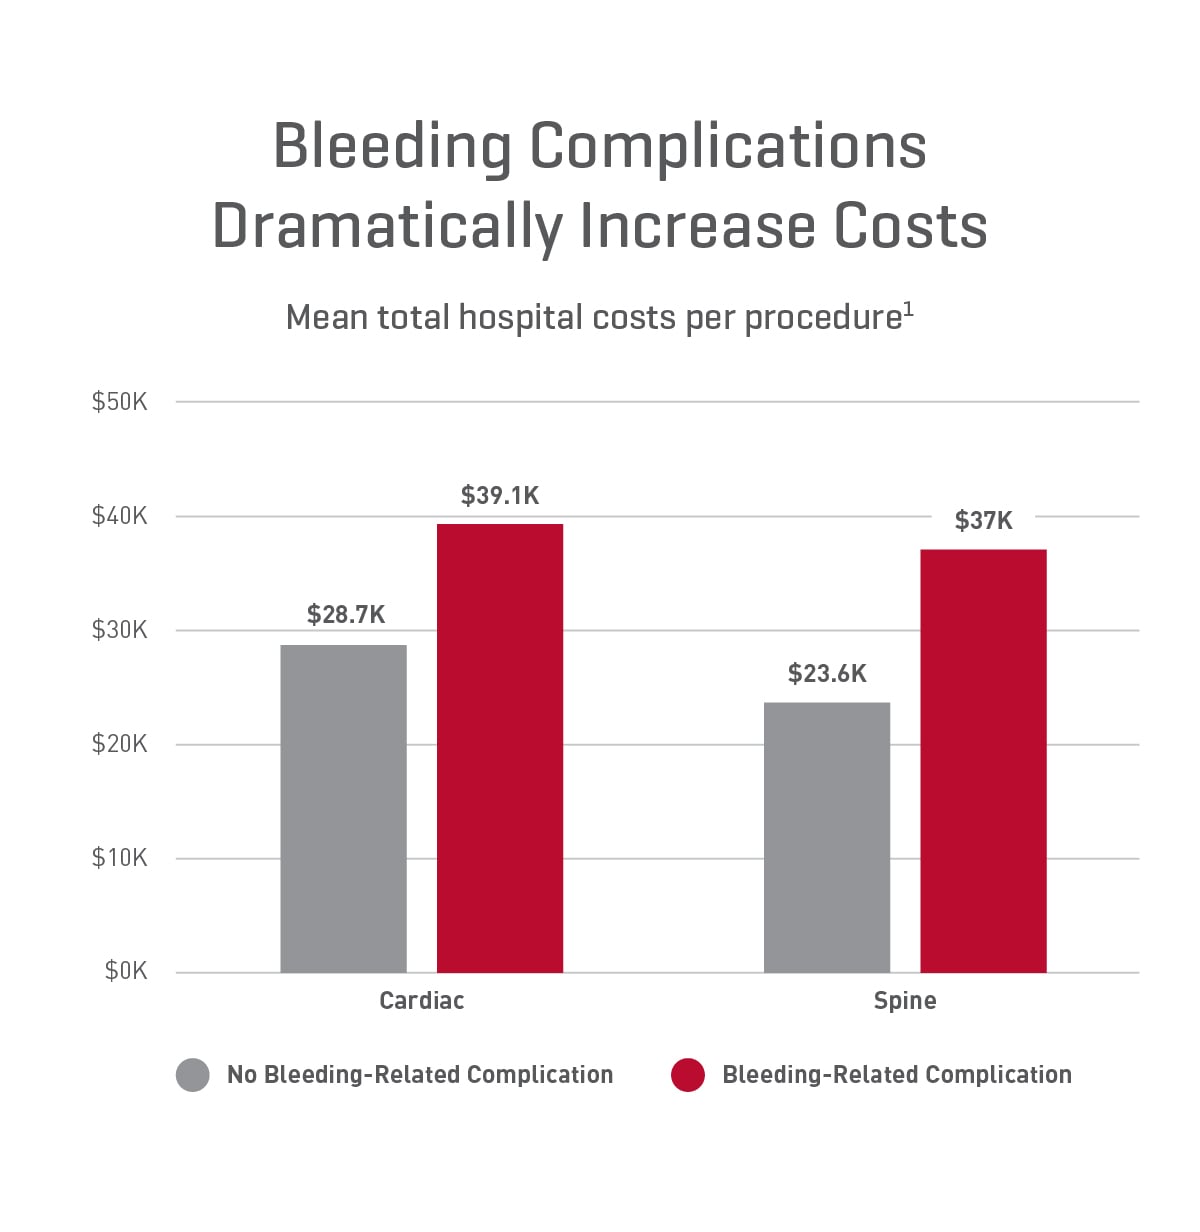 Bleeding Complications Increase Cost